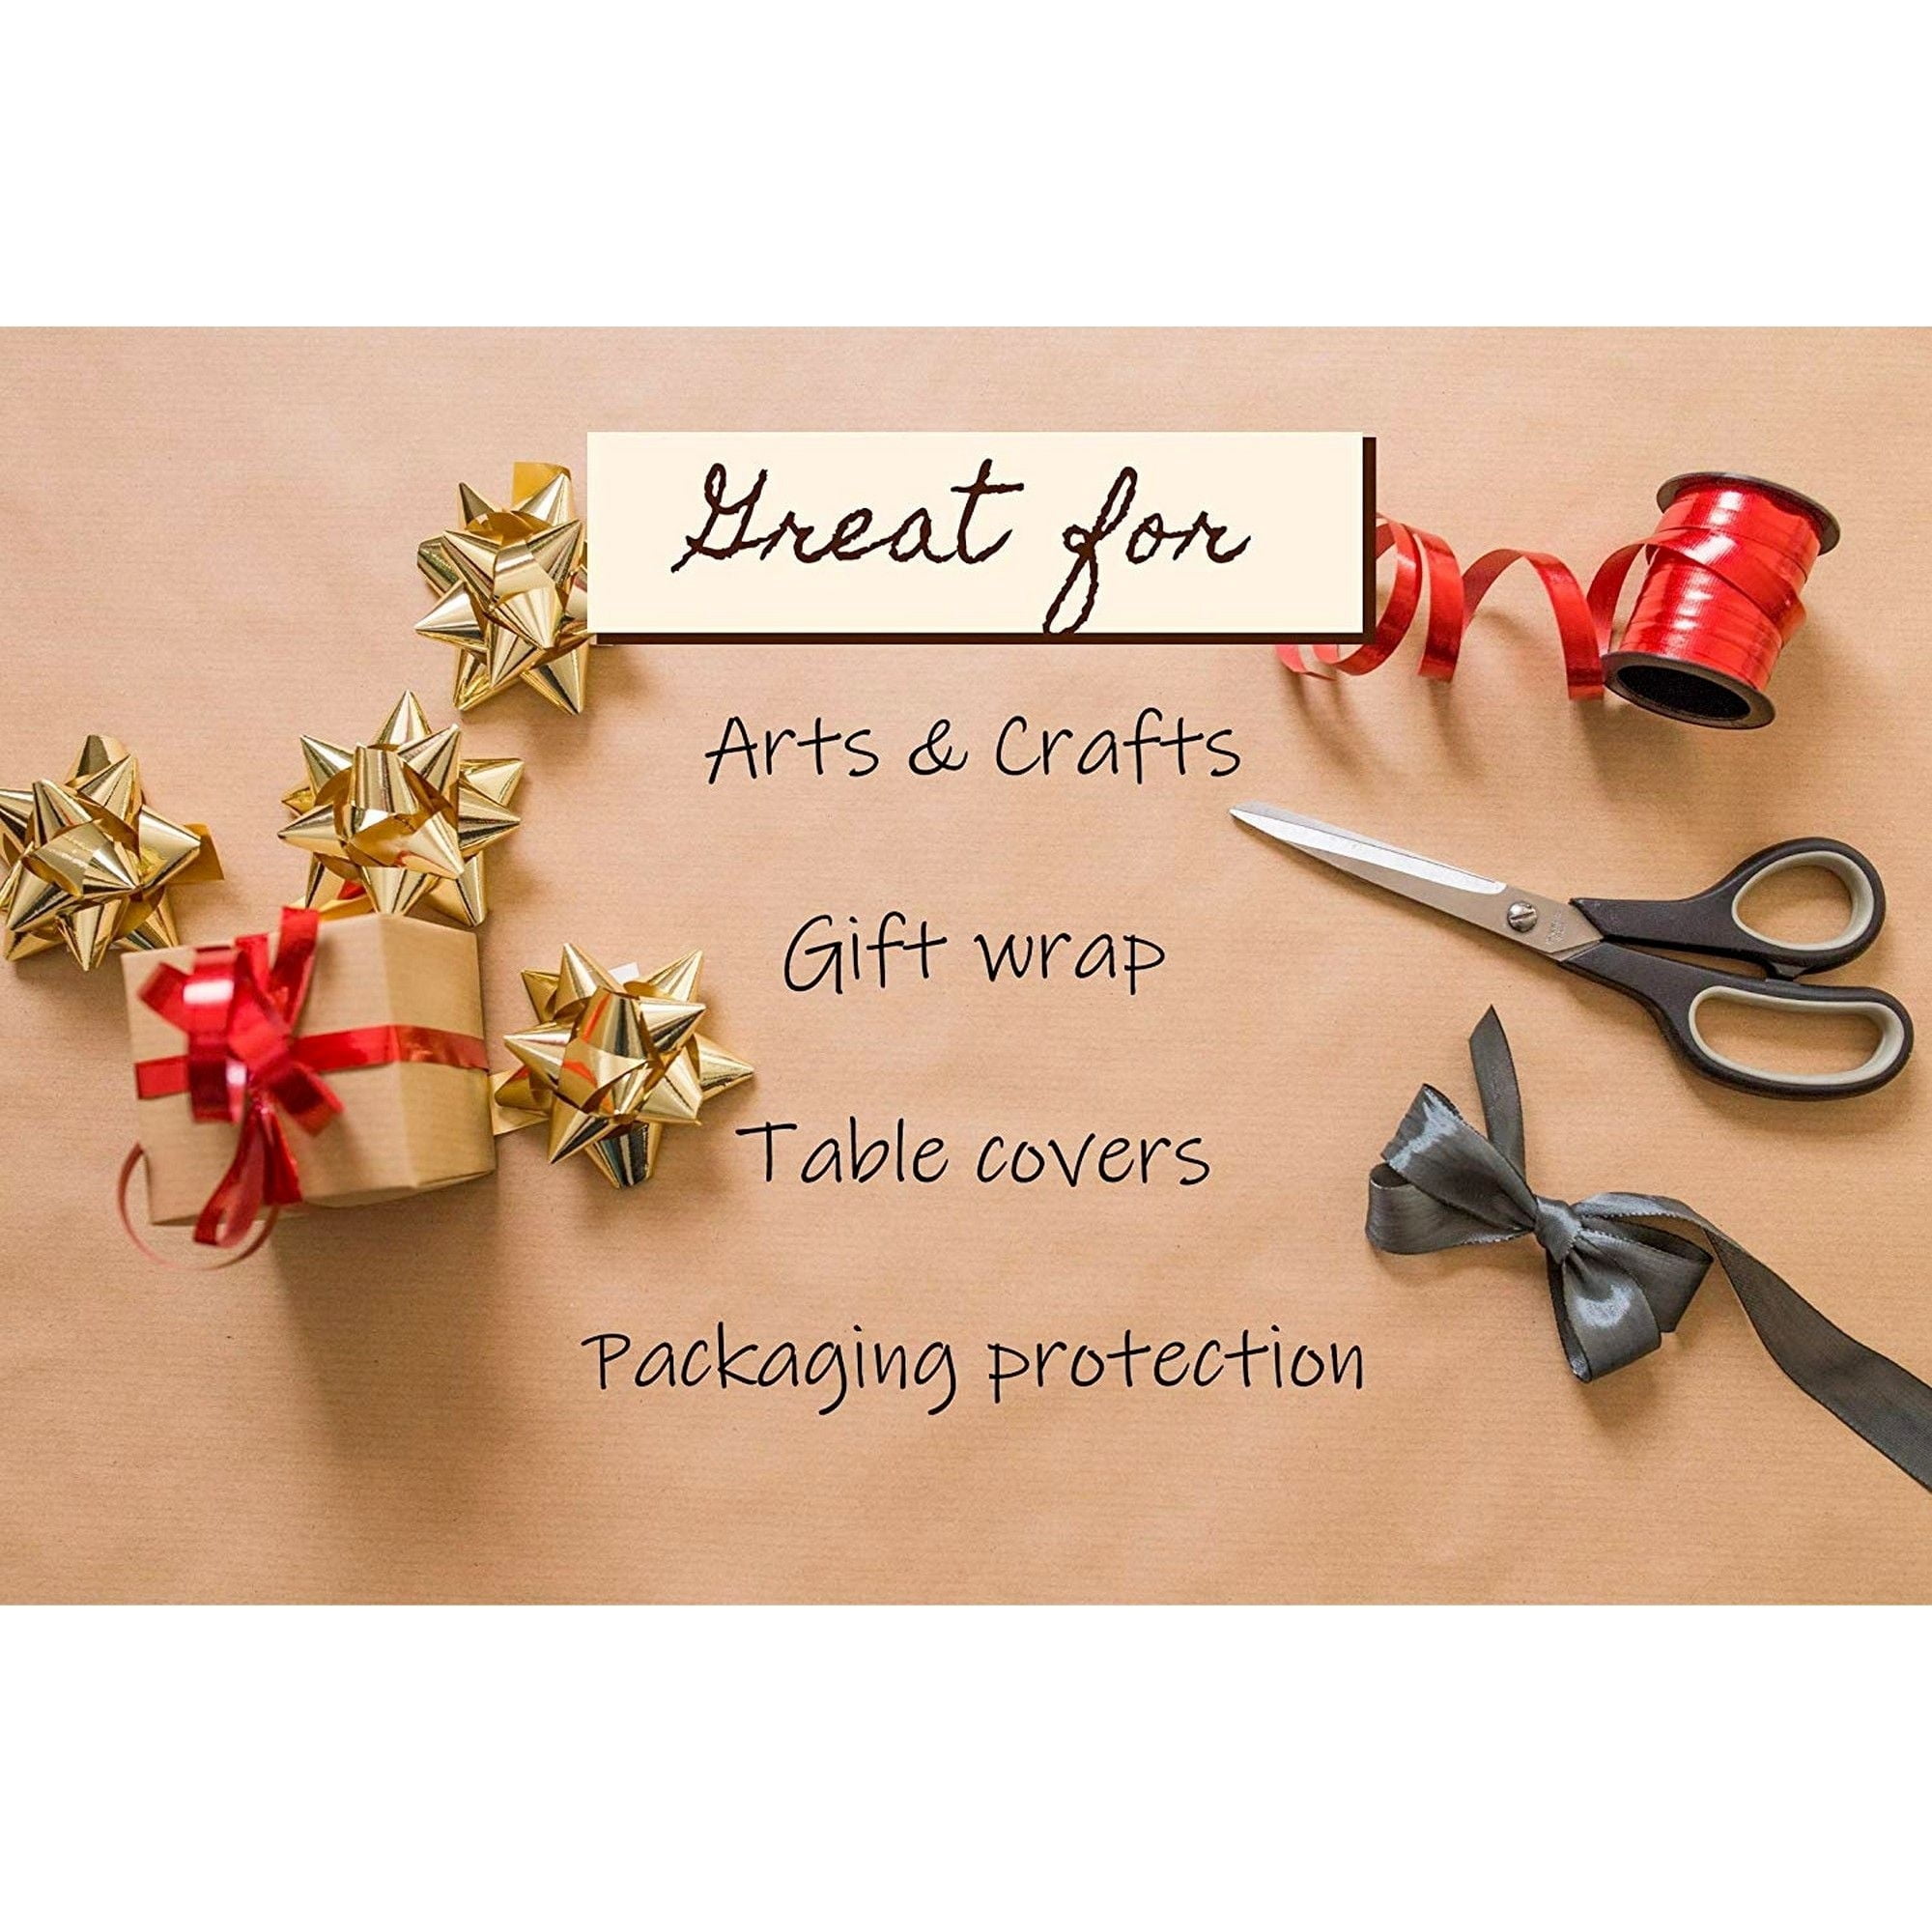 How To Make Gift Box ? DIY Gift Box | EASY Paper Craft Ideas - YouTube |  Diy jewelry gift box, Paper box diy, Jewelry box diy